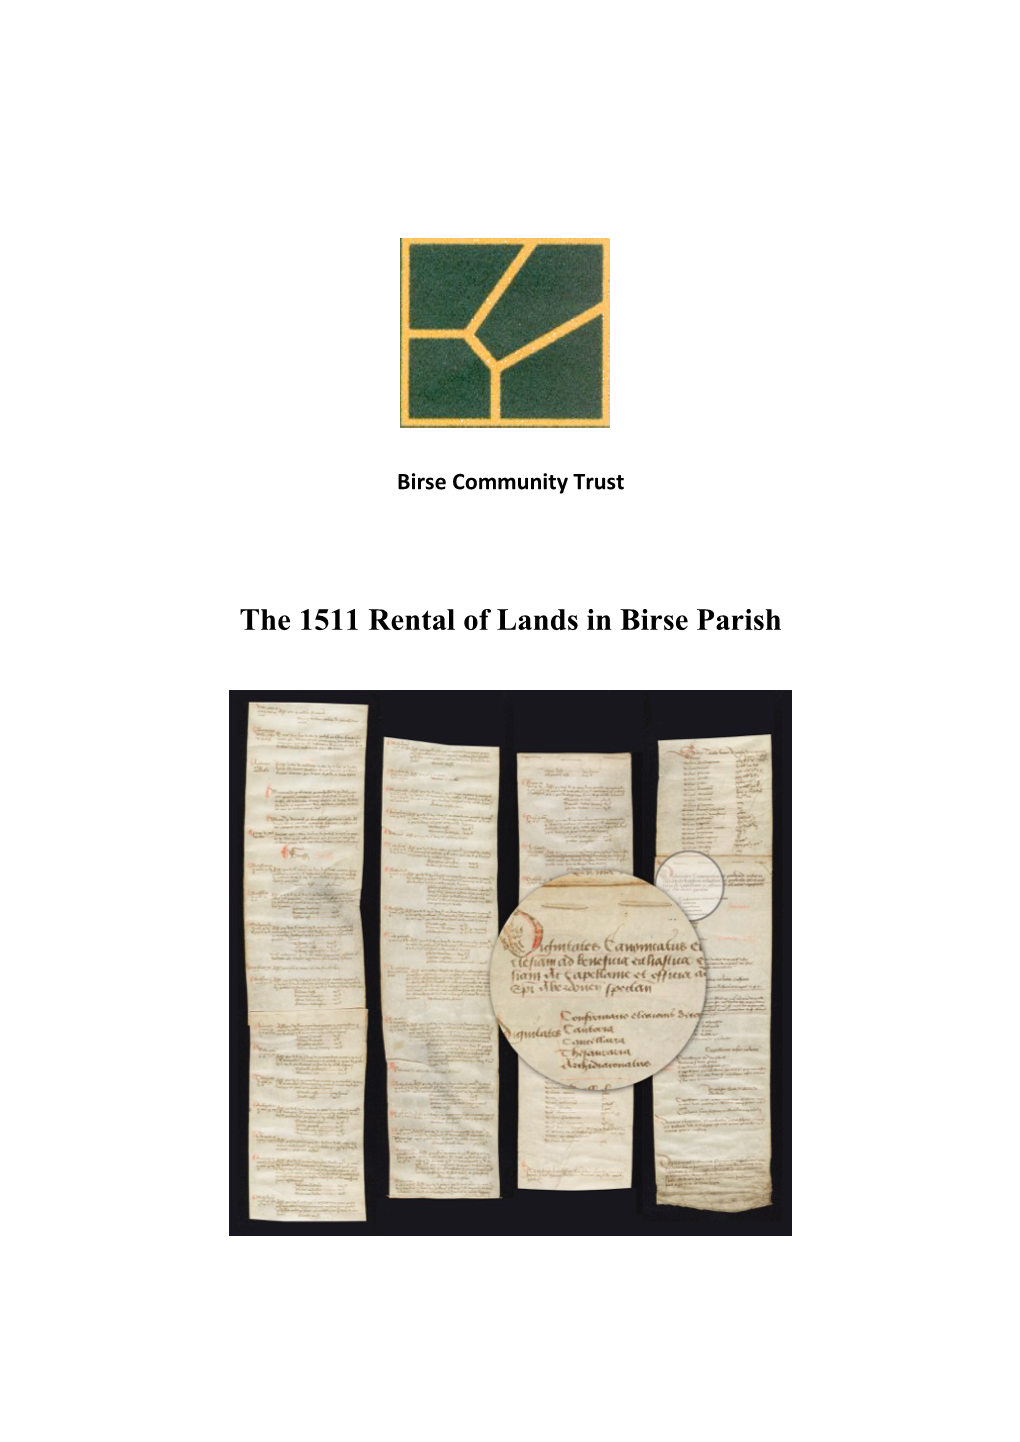 The 1511 Rental of Lands in Birse Parish